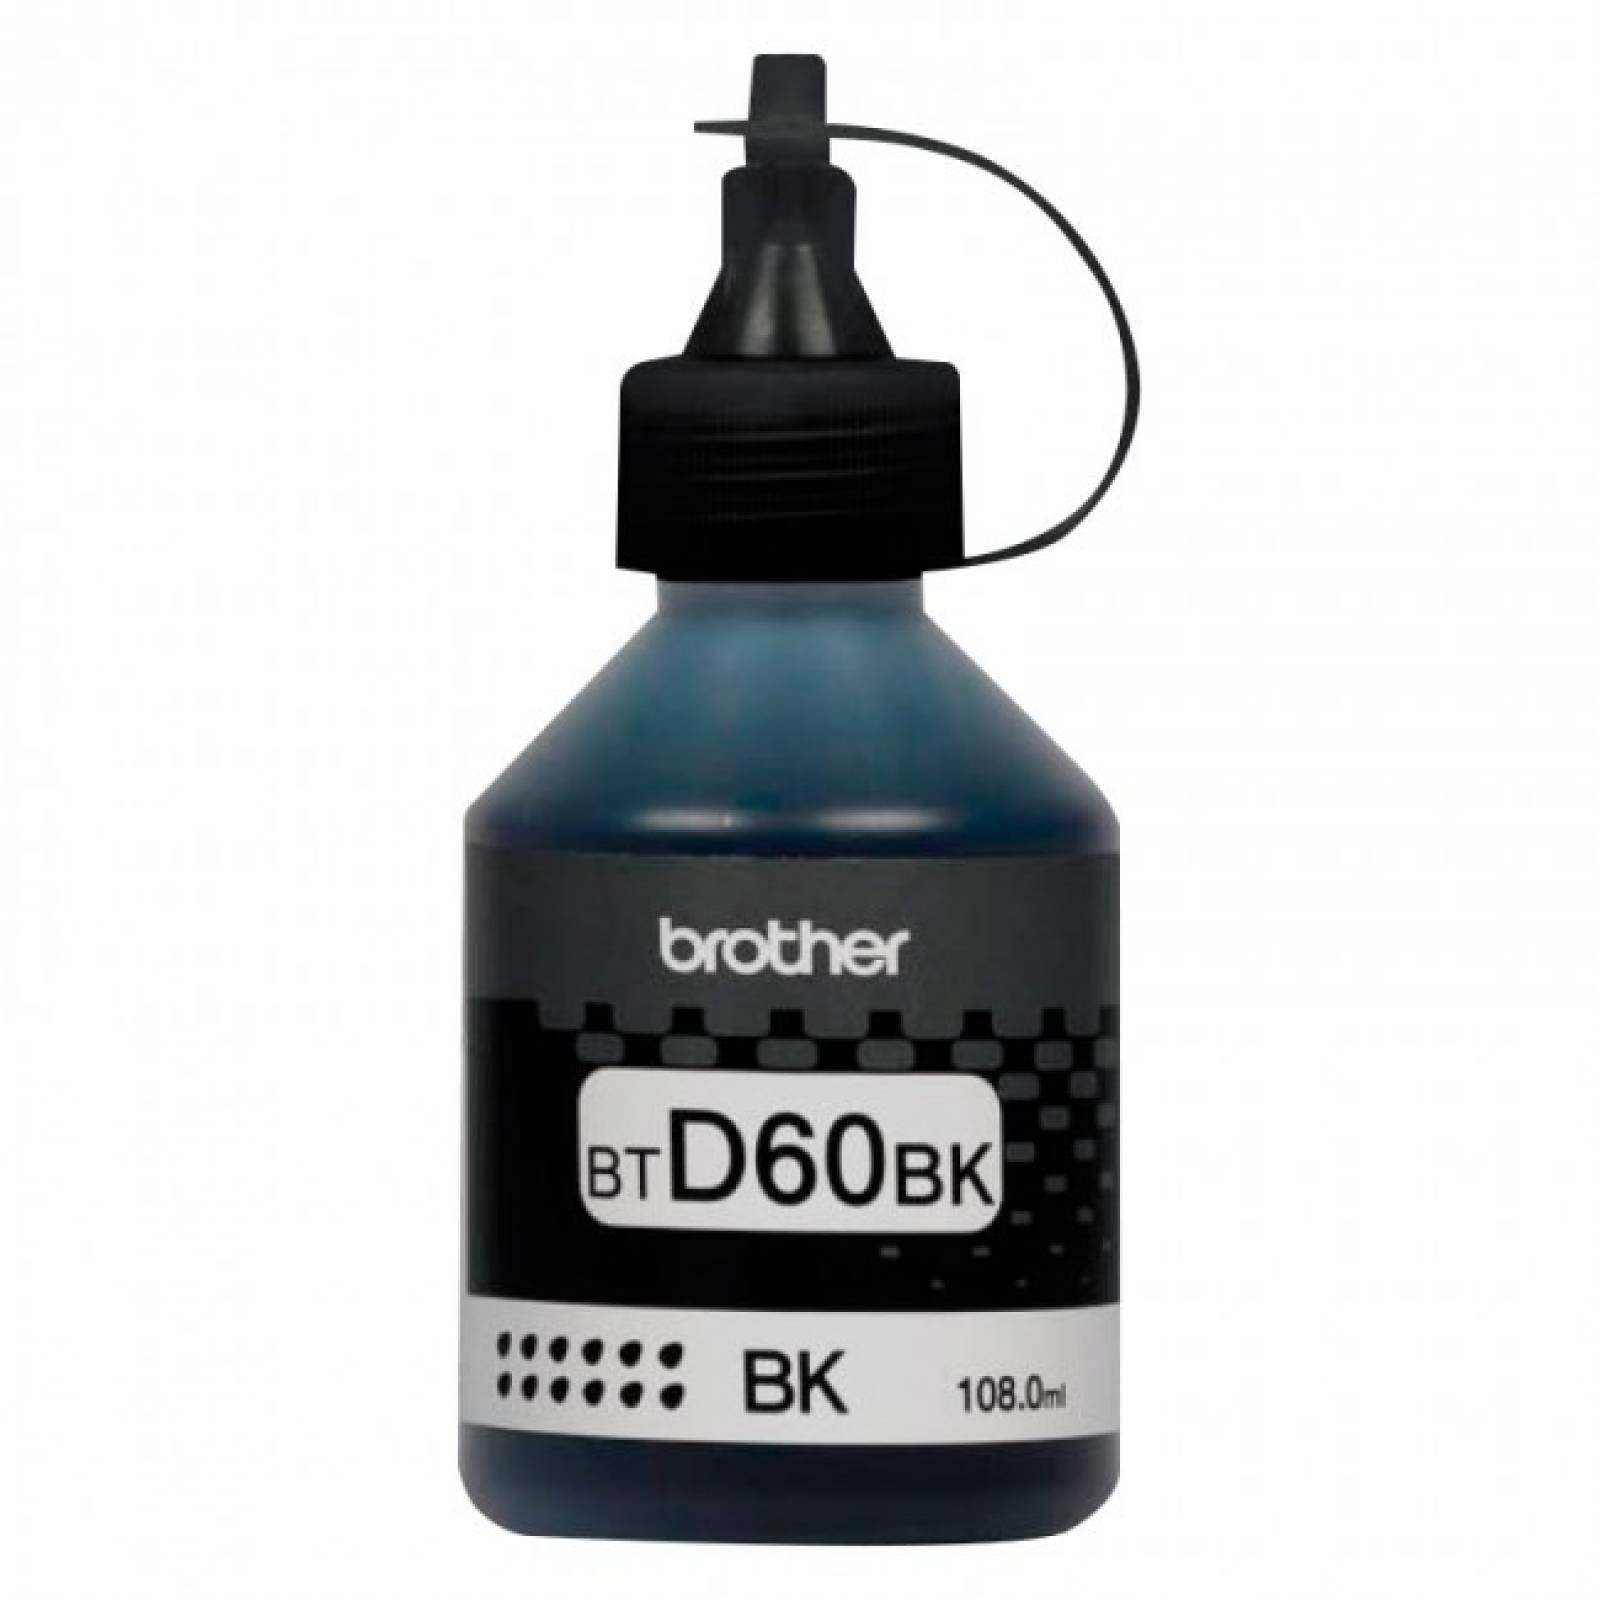 Botella de tinta BROTHER BTD60BK